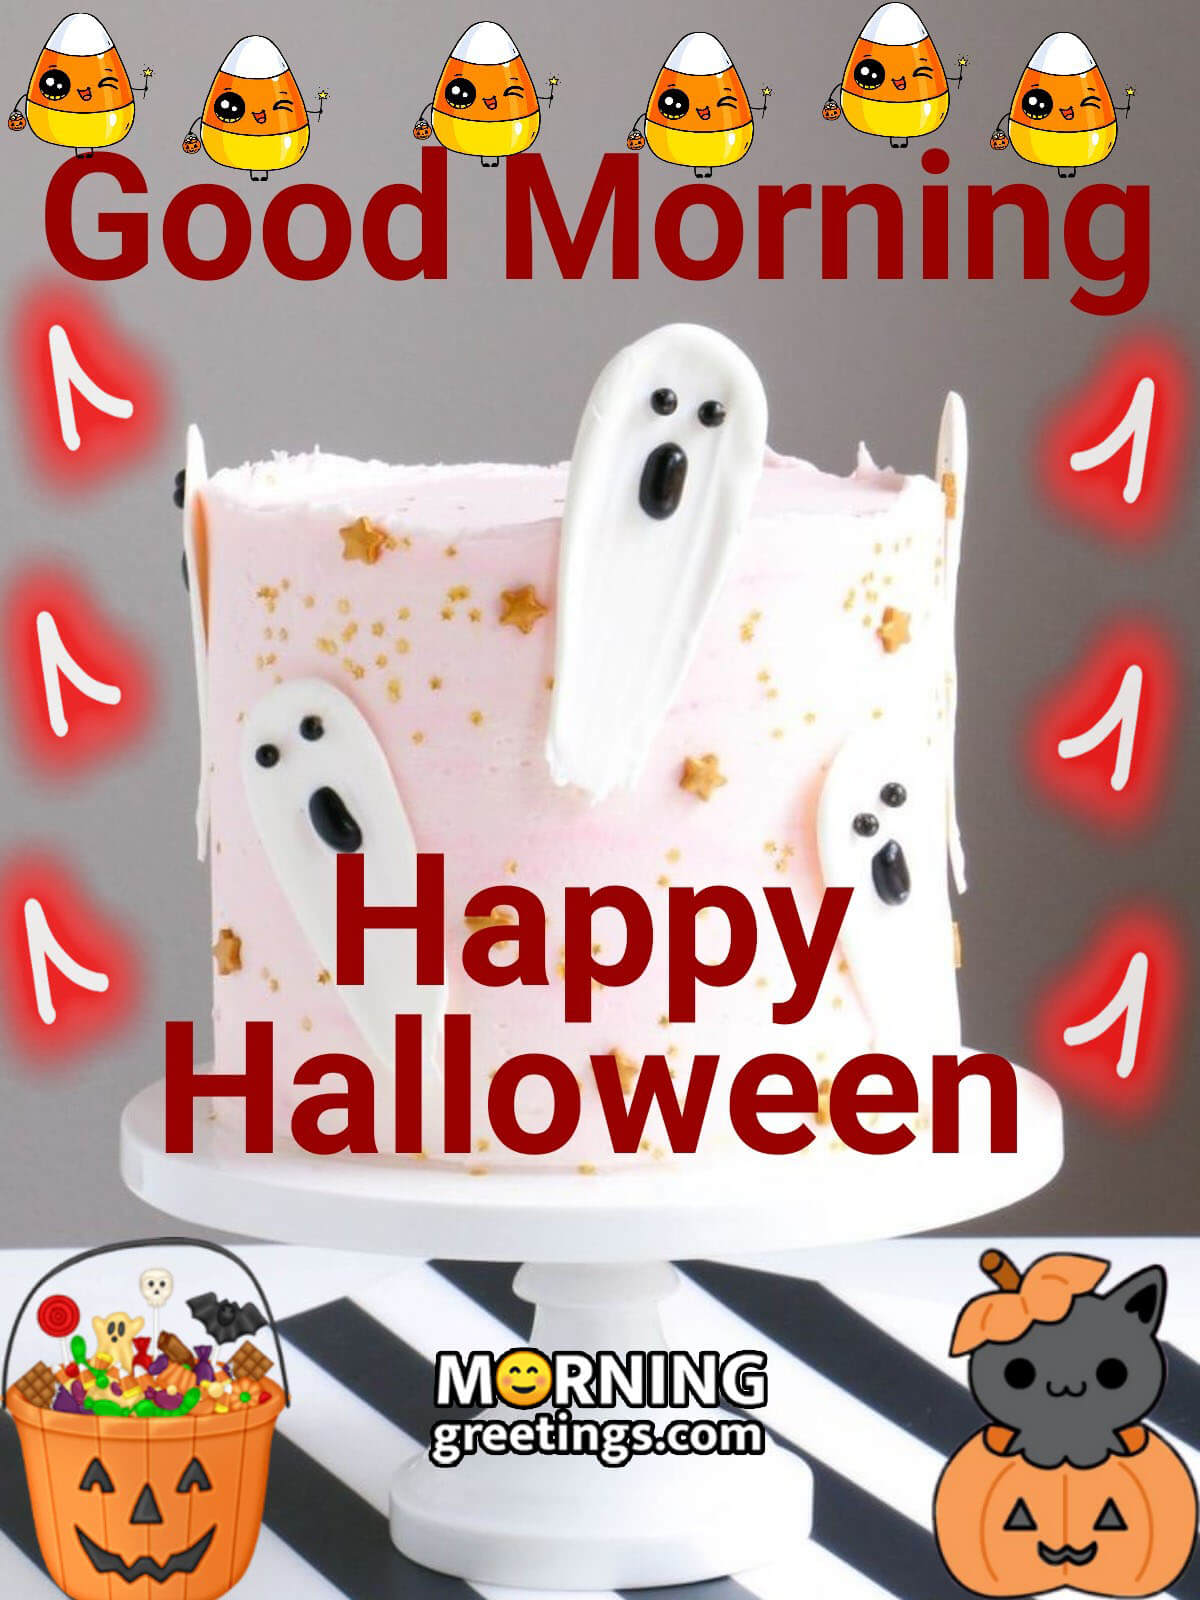 Good Morning Happy Halloween Image